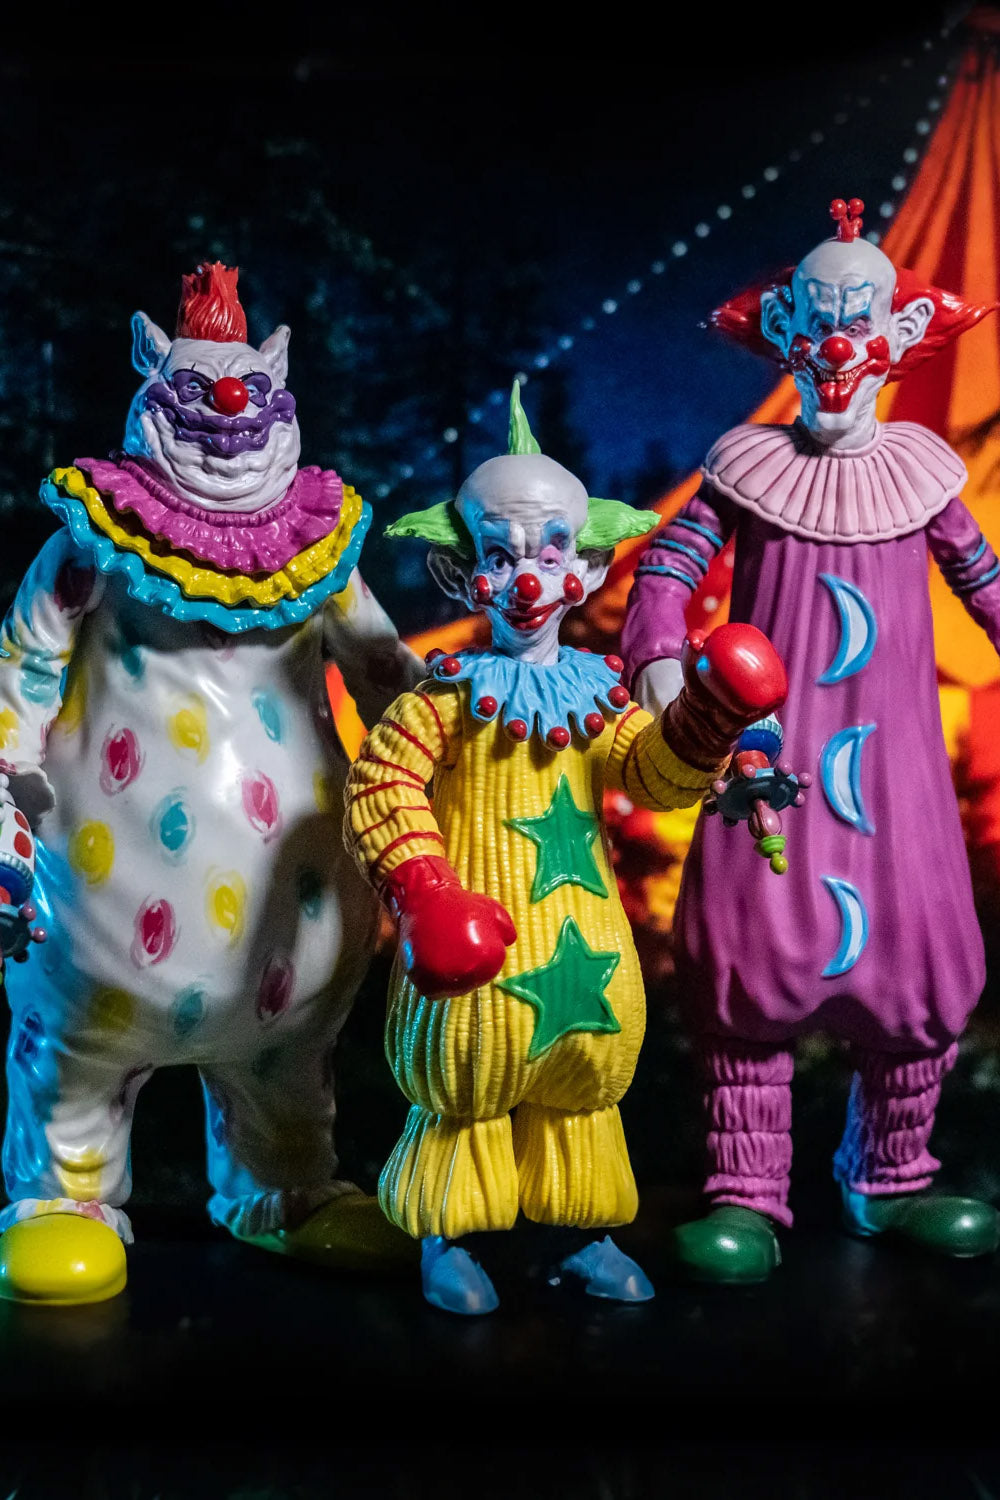 creepy circus clown toy